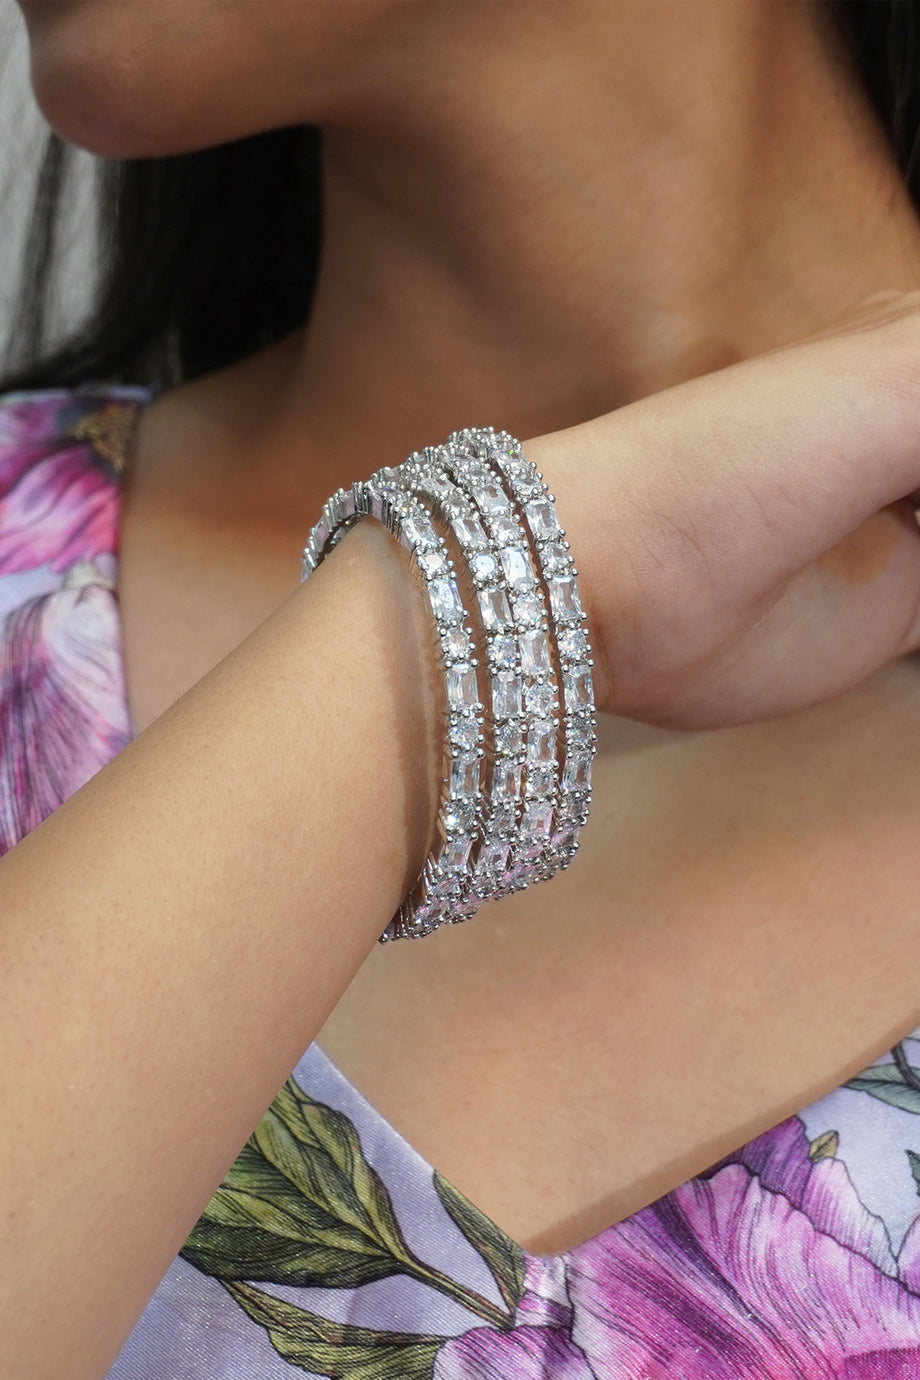 Artificial Diamonds Diamond Chain Bracelet In Sterling Silver For Men at Rs  150/gram in Jaipur